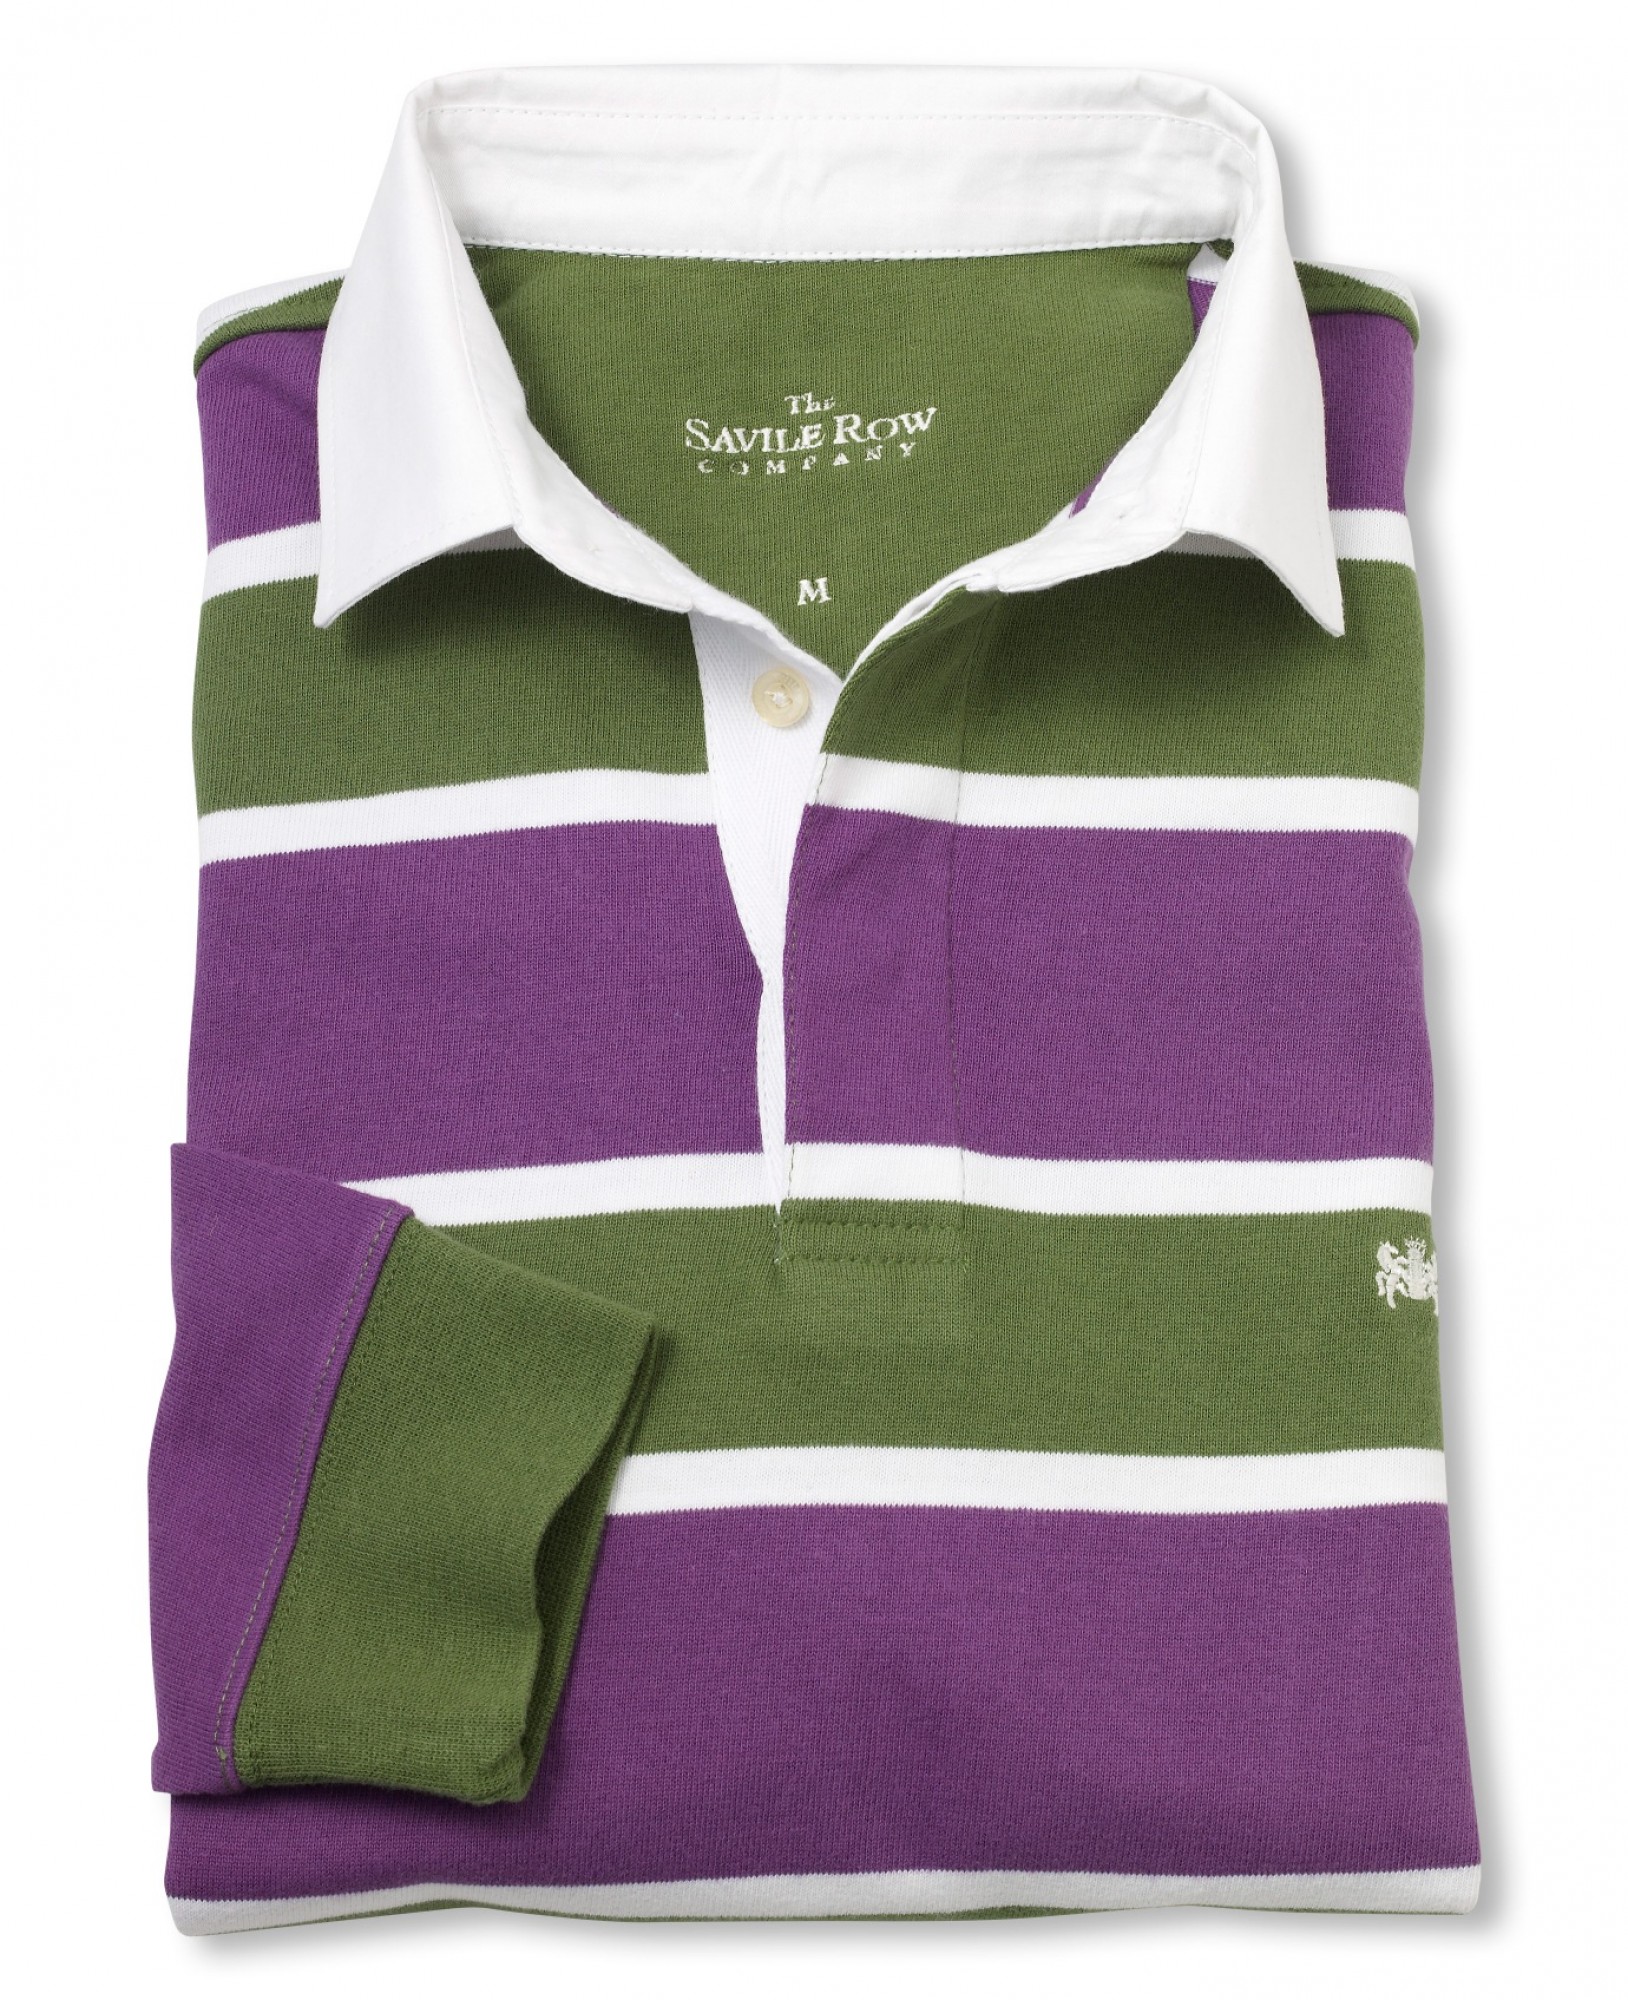 Savile Row Co. Purple White Green Stripe Rugby Shirt XXXL